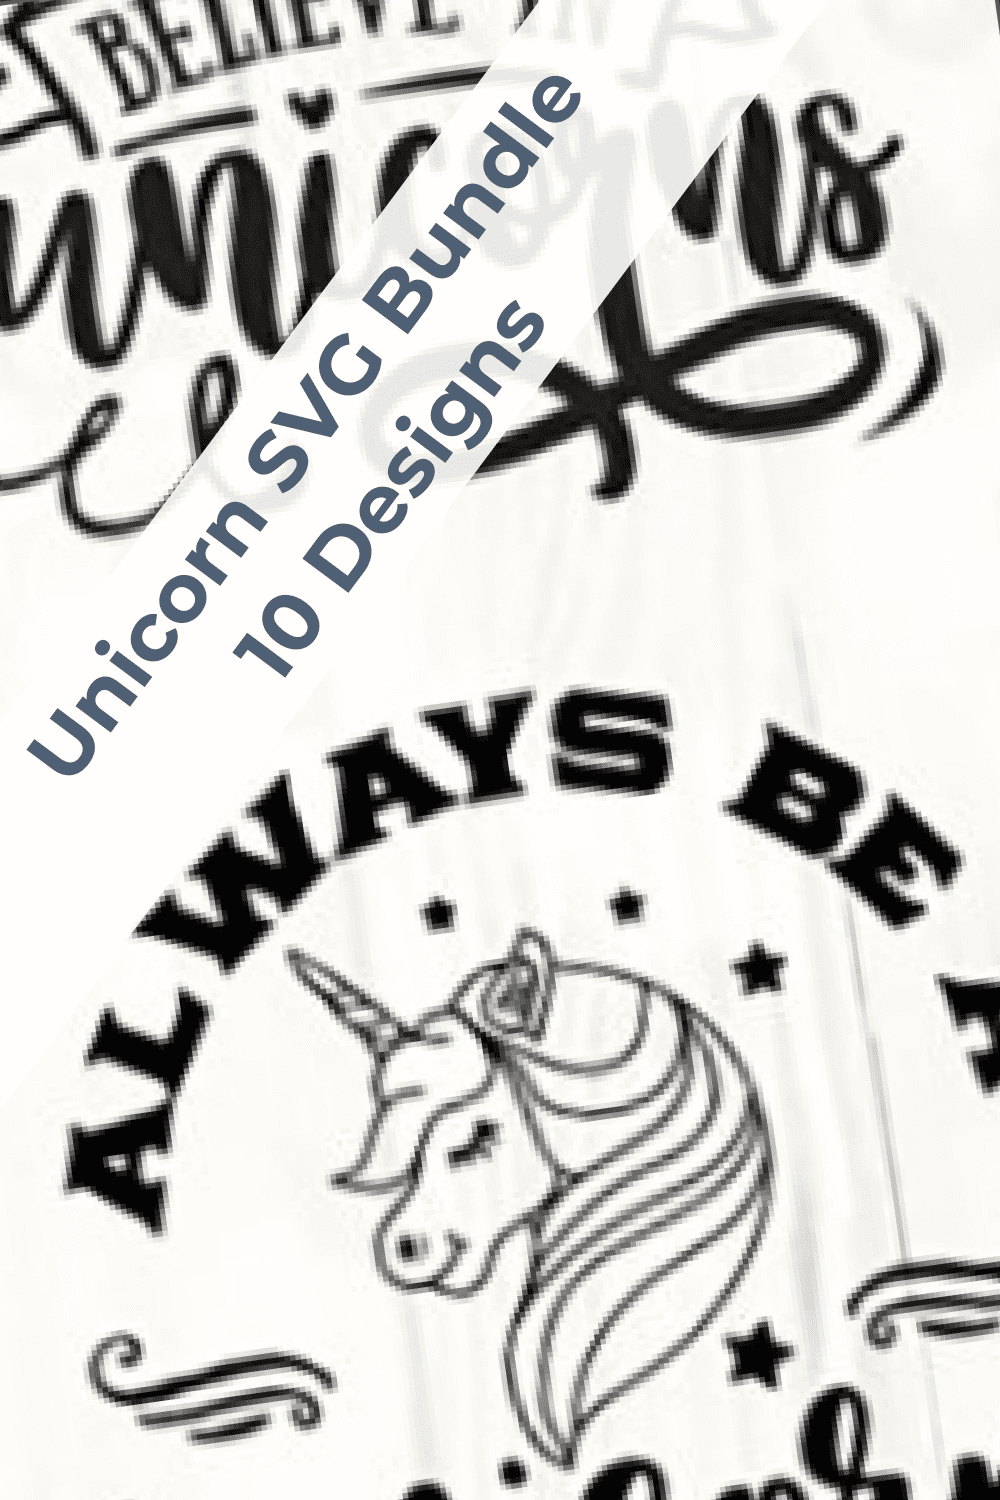 Unicorn SVG bundle 10 designs.